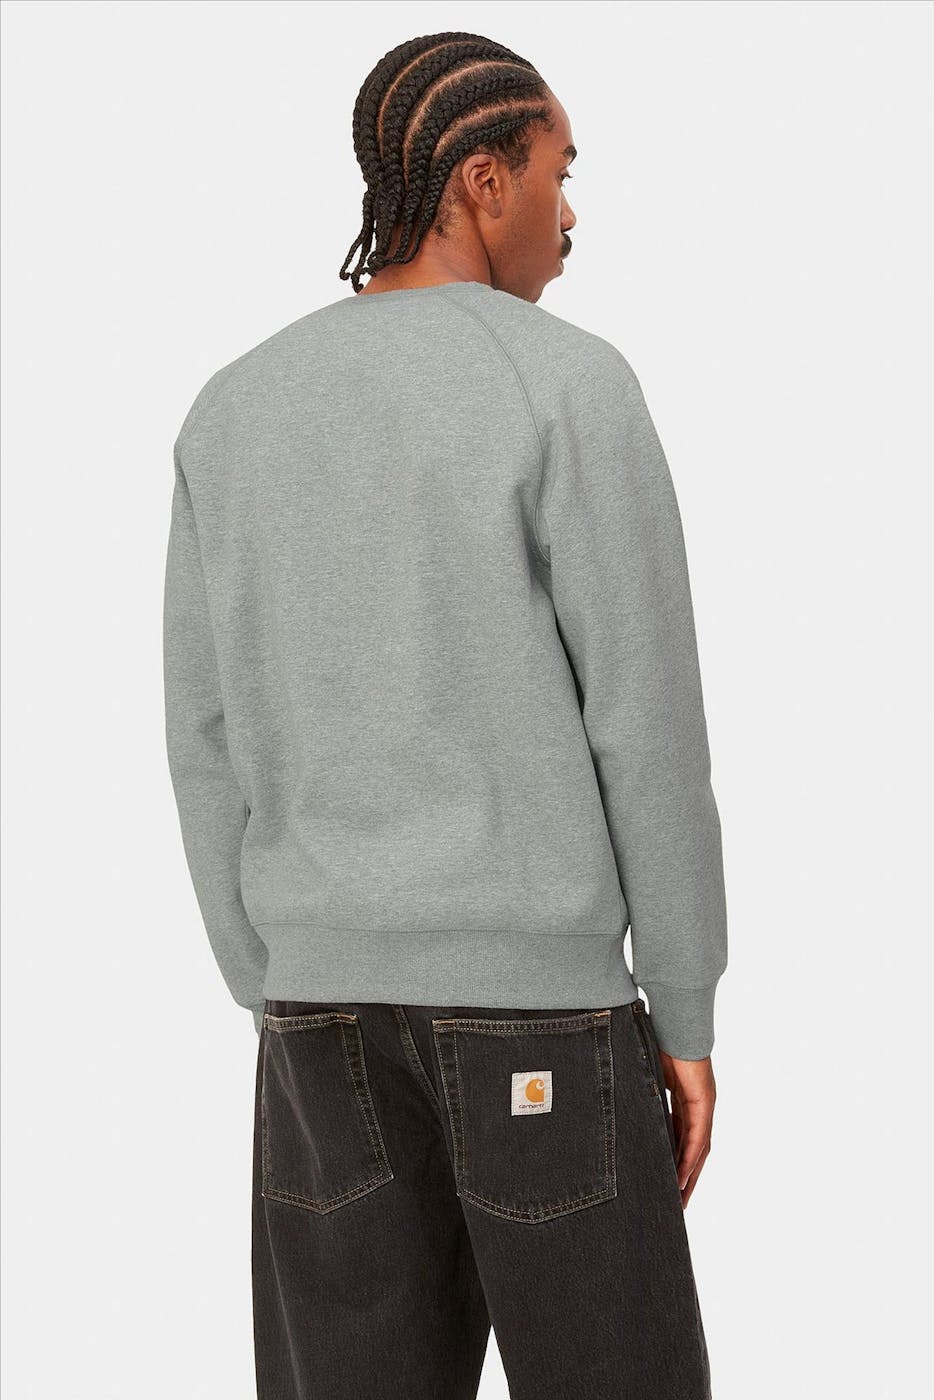 Carhartt WIP - Grijze Chase sweater